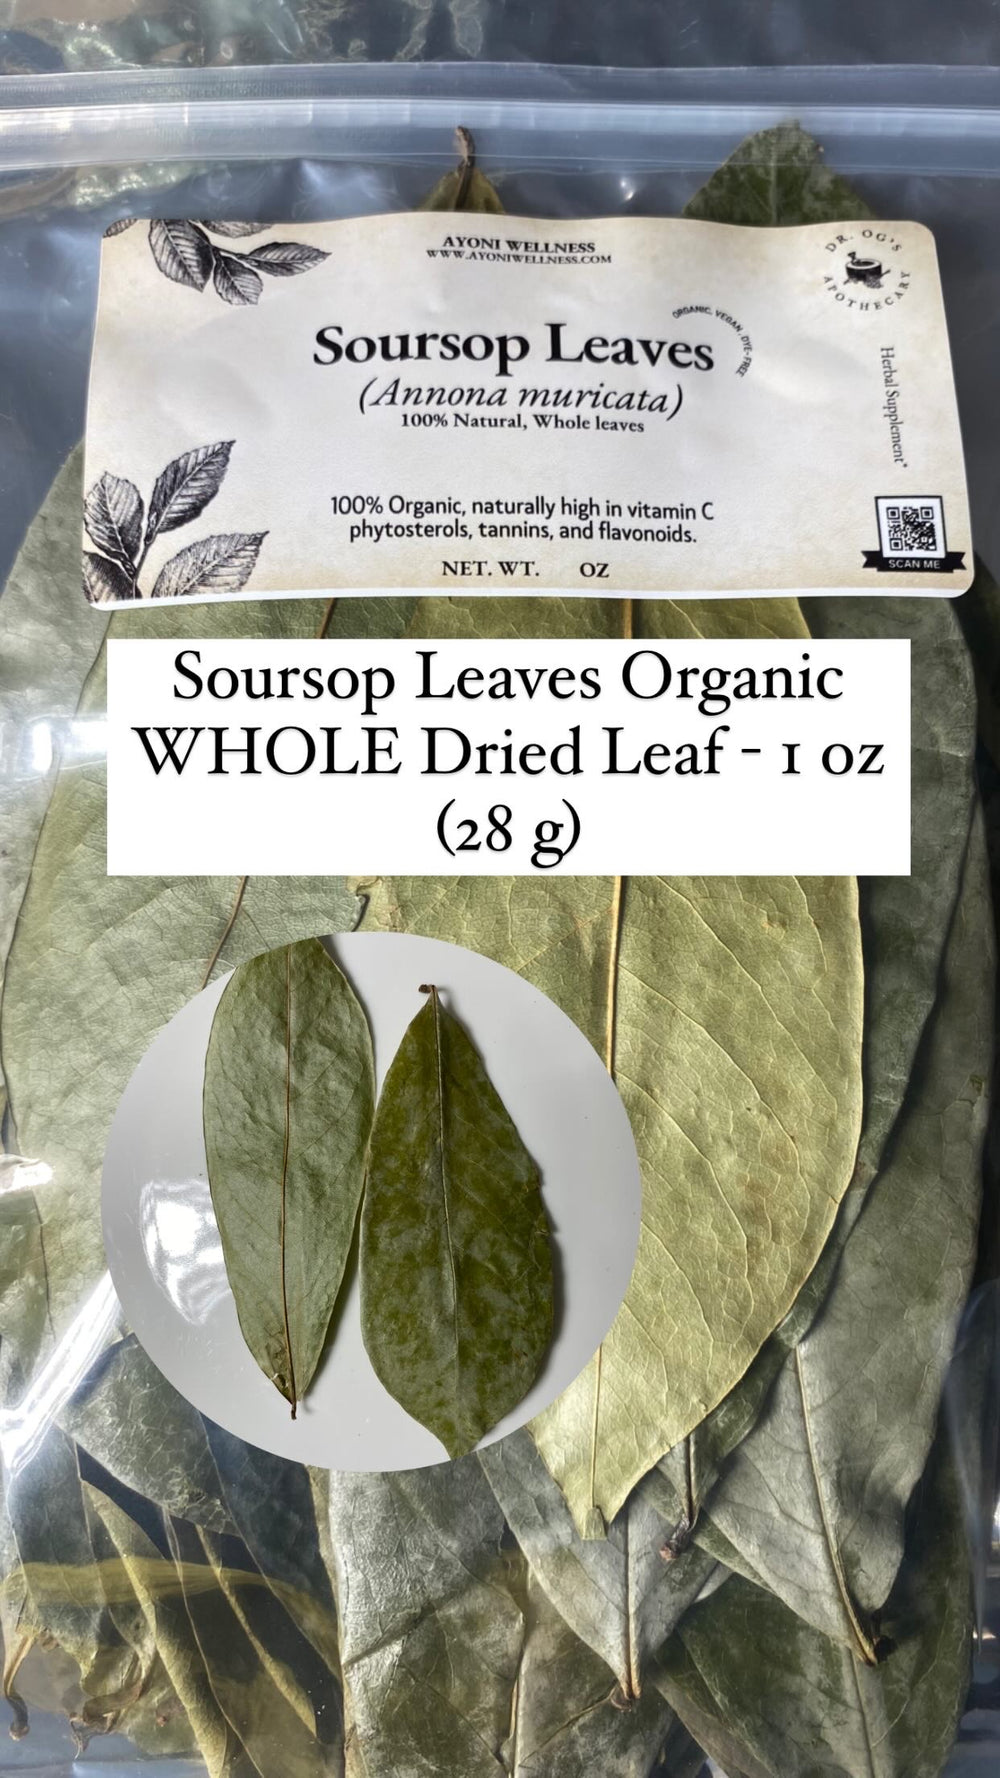 Organic Soursop Leaves, WHOLE Dried Leaf - 1 oz (28 g) - Ayoni Wellness